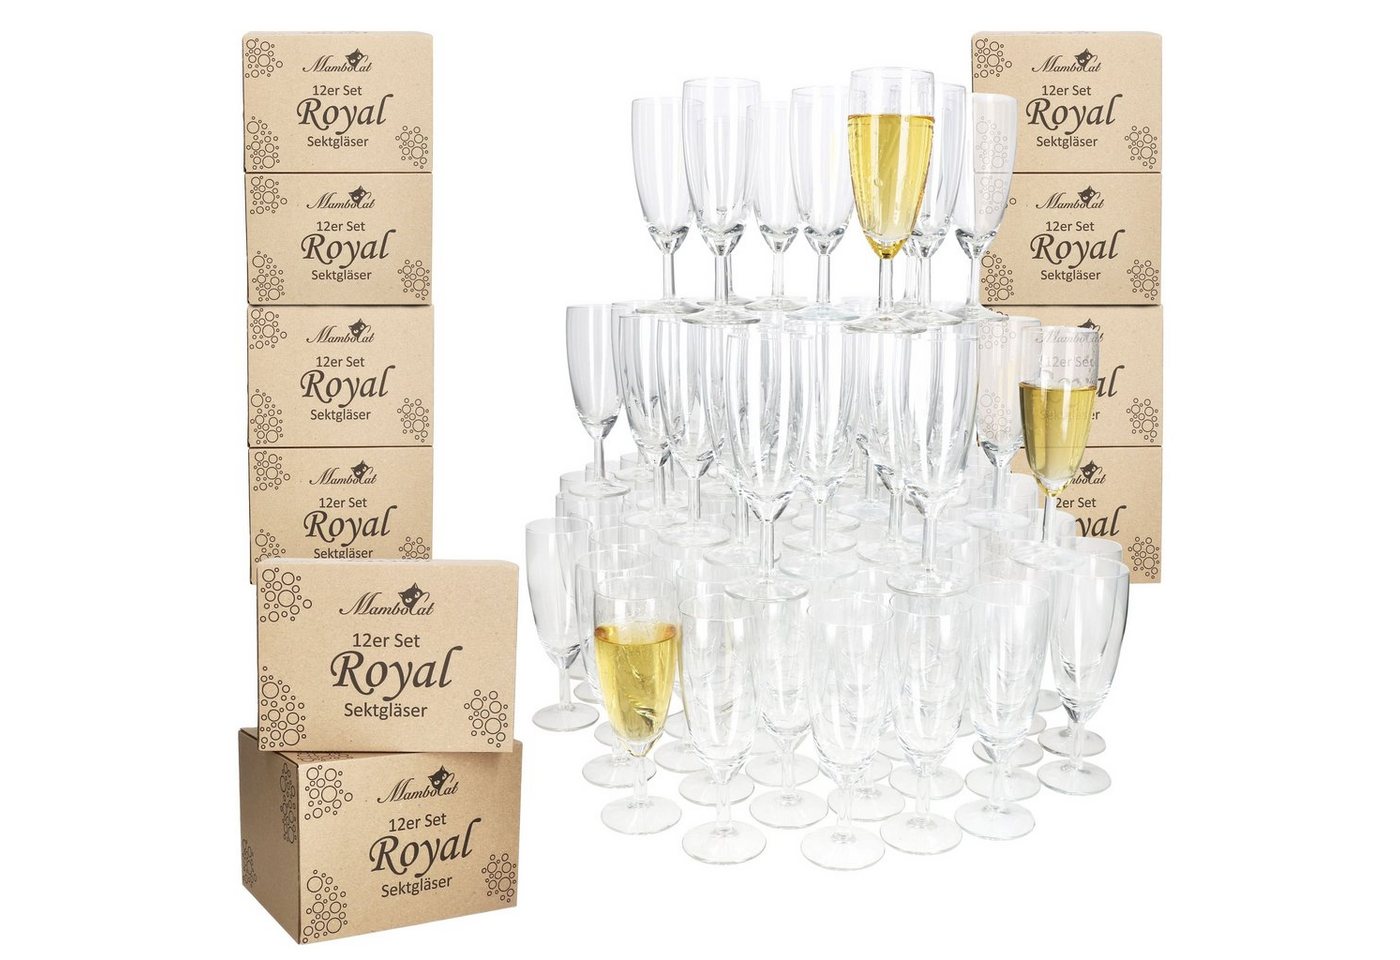 MamboCat Sektglas 120er Set Royal Sektgläser 140ml Champagner-Glas klare Prosecco Party, Glas von MamboCat